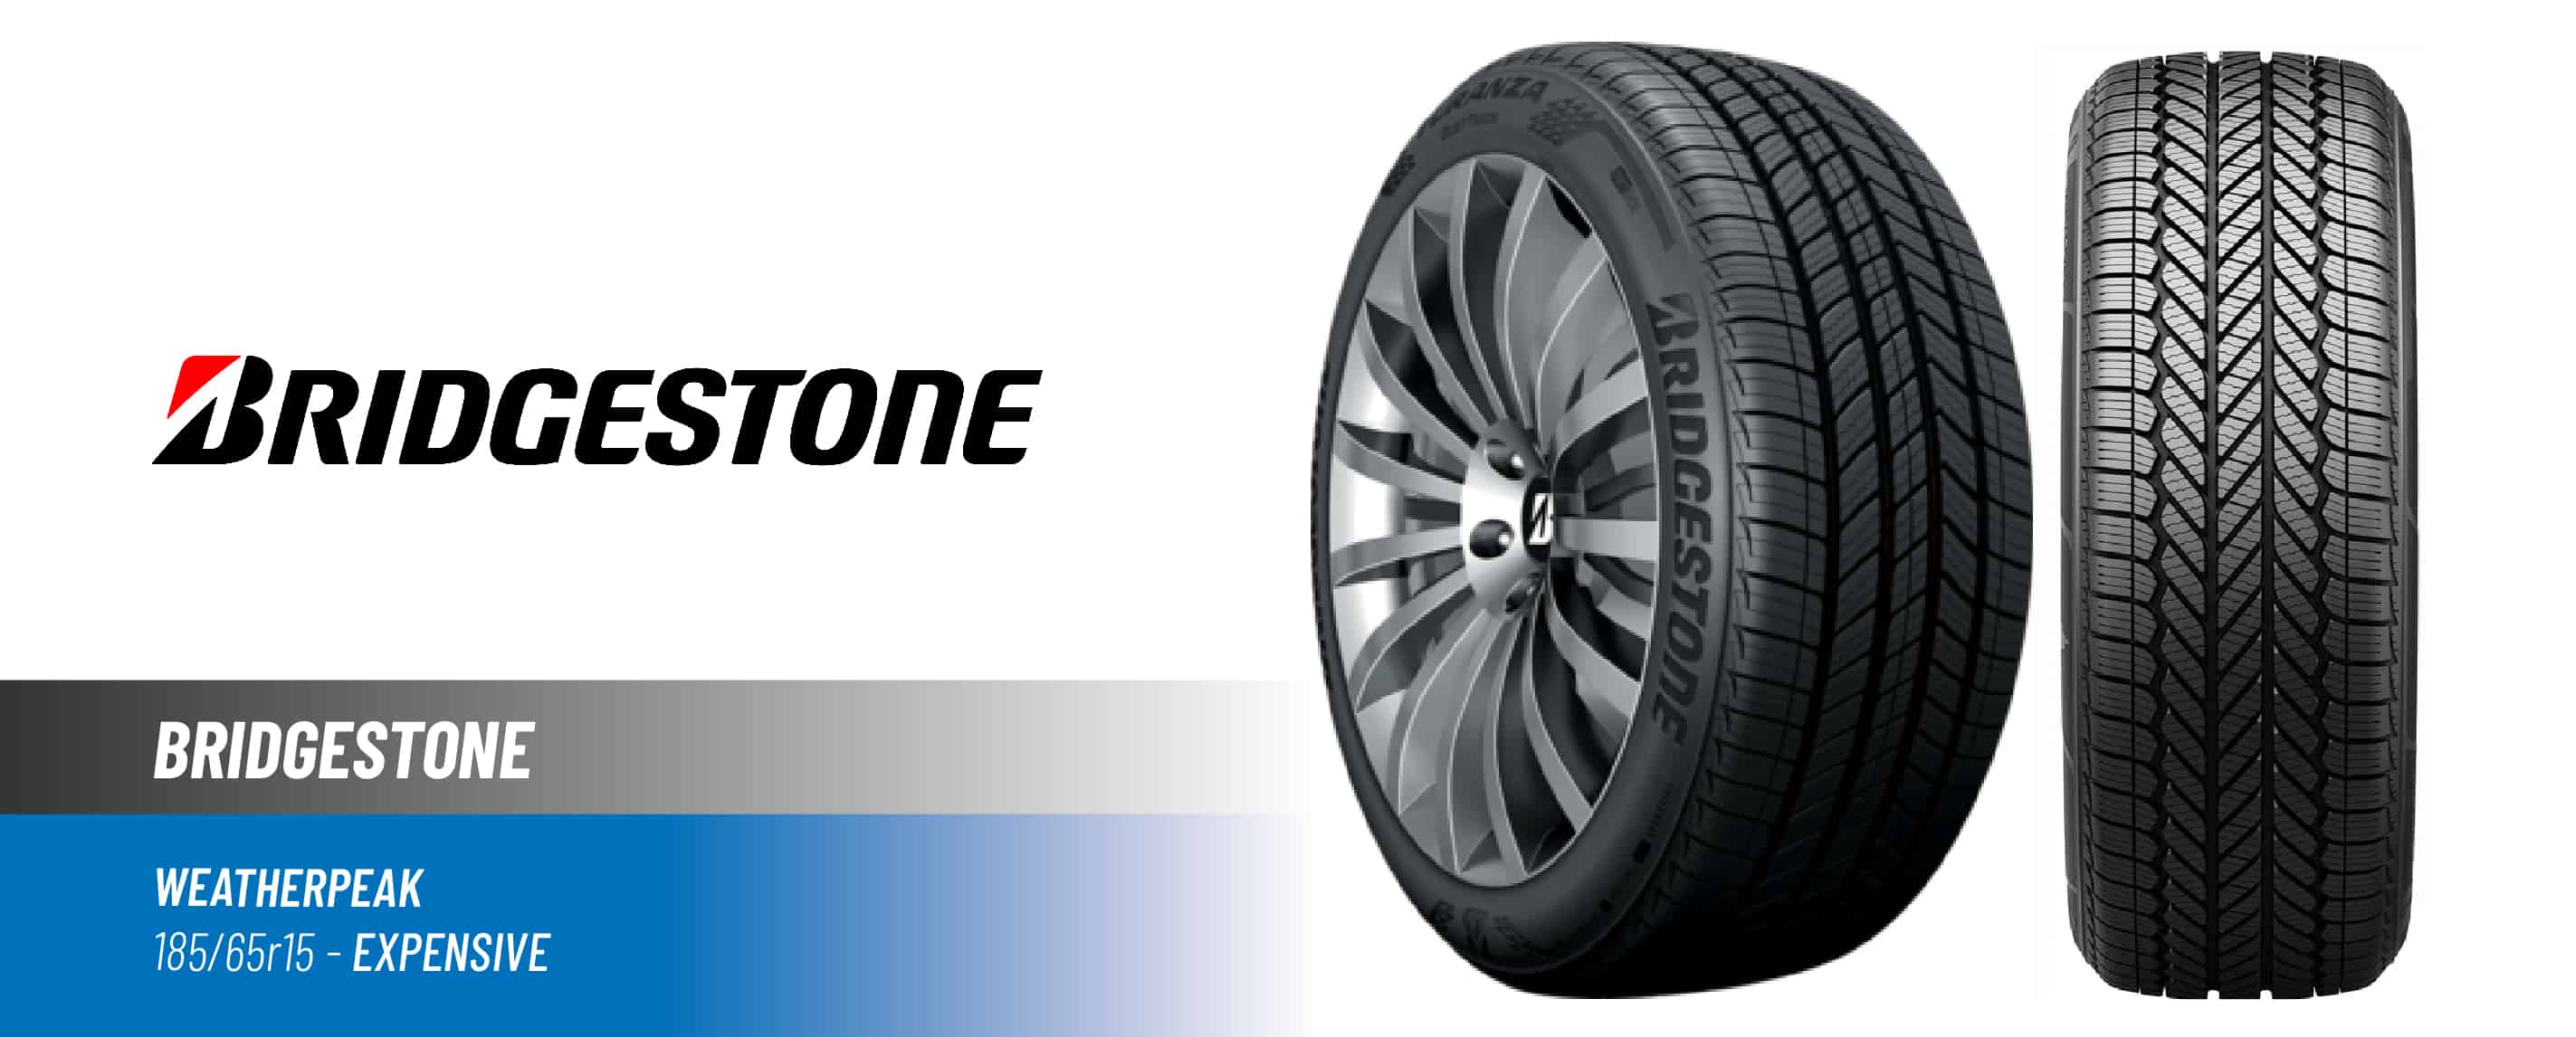 Top#1 High Price: Bridgestone Weatherpeak – 185 65 r15